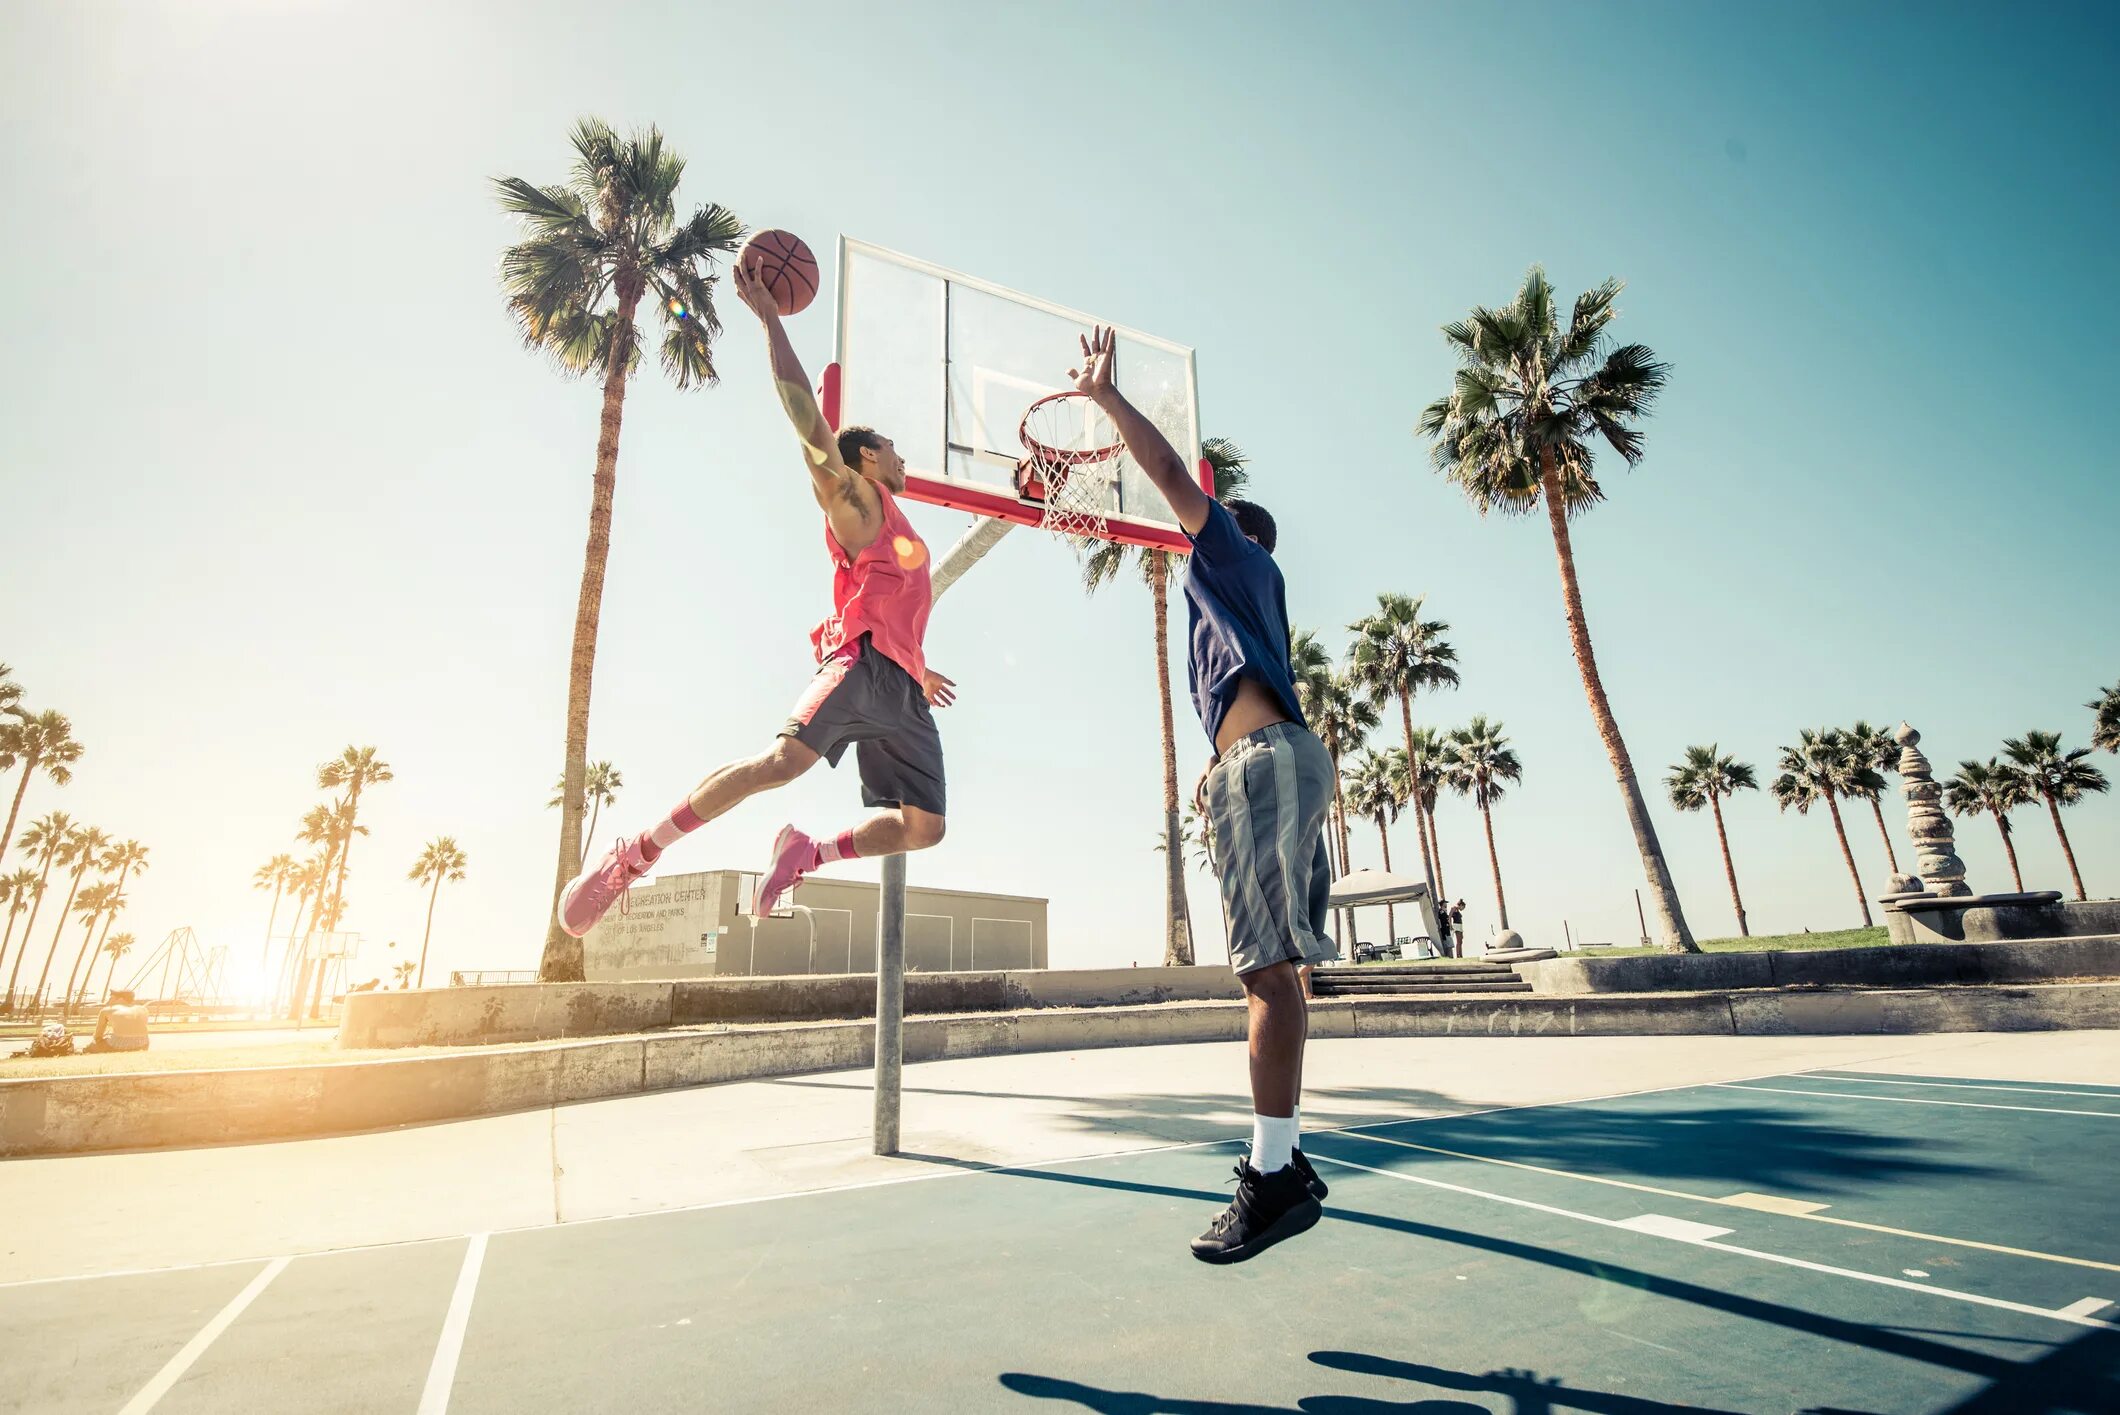 My friend plays basketball than me. Венис (Лос-Анджелес). Баскетбольная площадка Майами. Венис Бич баскетбольная площадка. Баскетбол на улице.